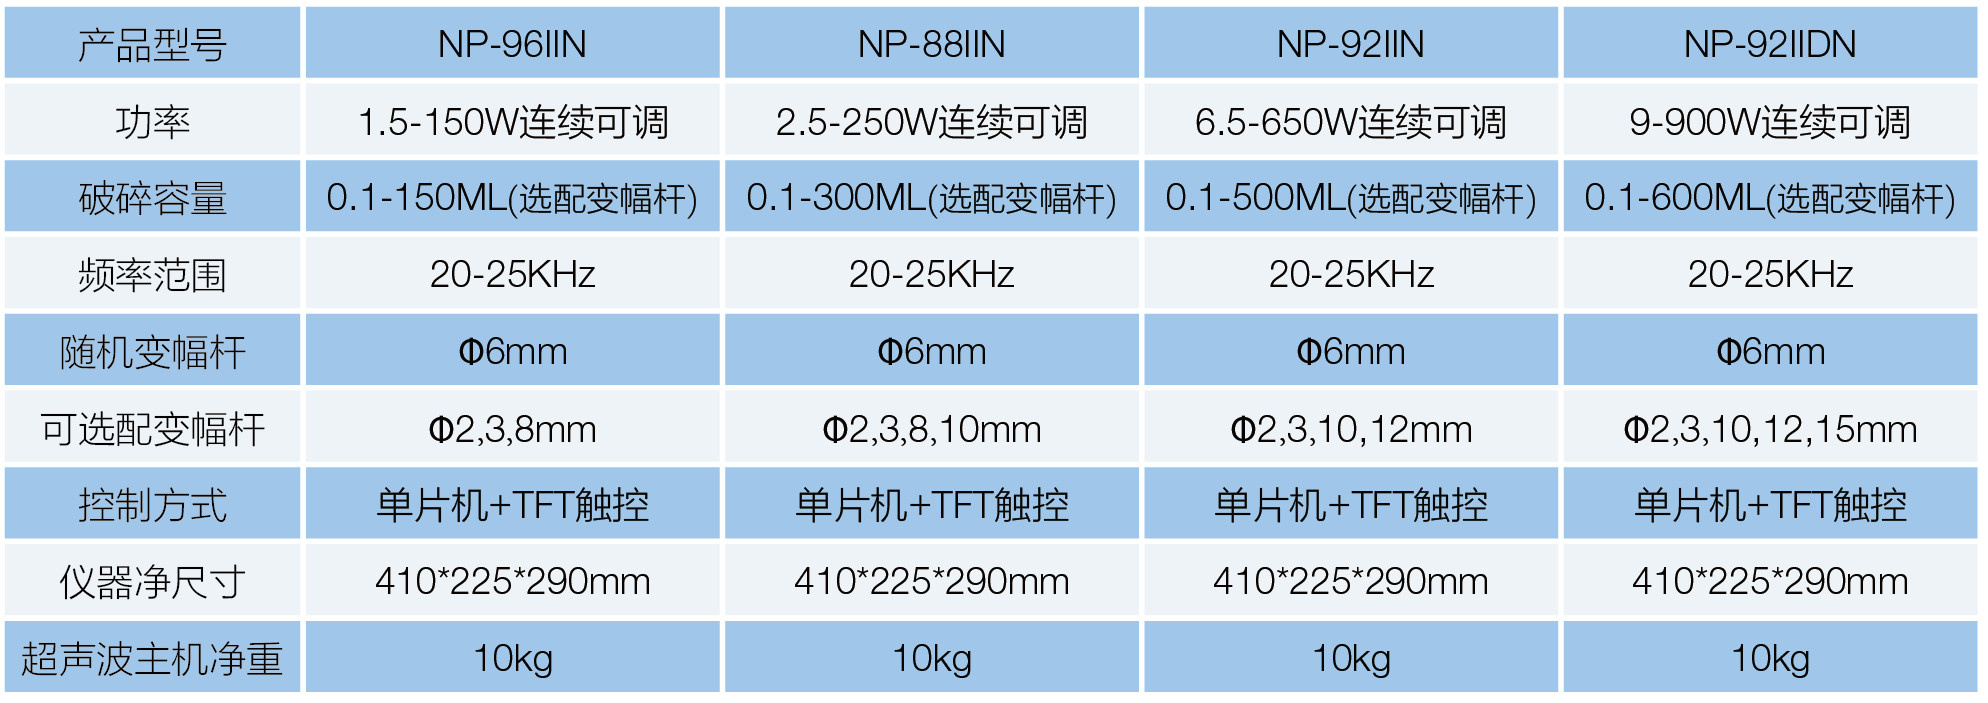 NP-88IIN 超声波细胞破坏机(图1)